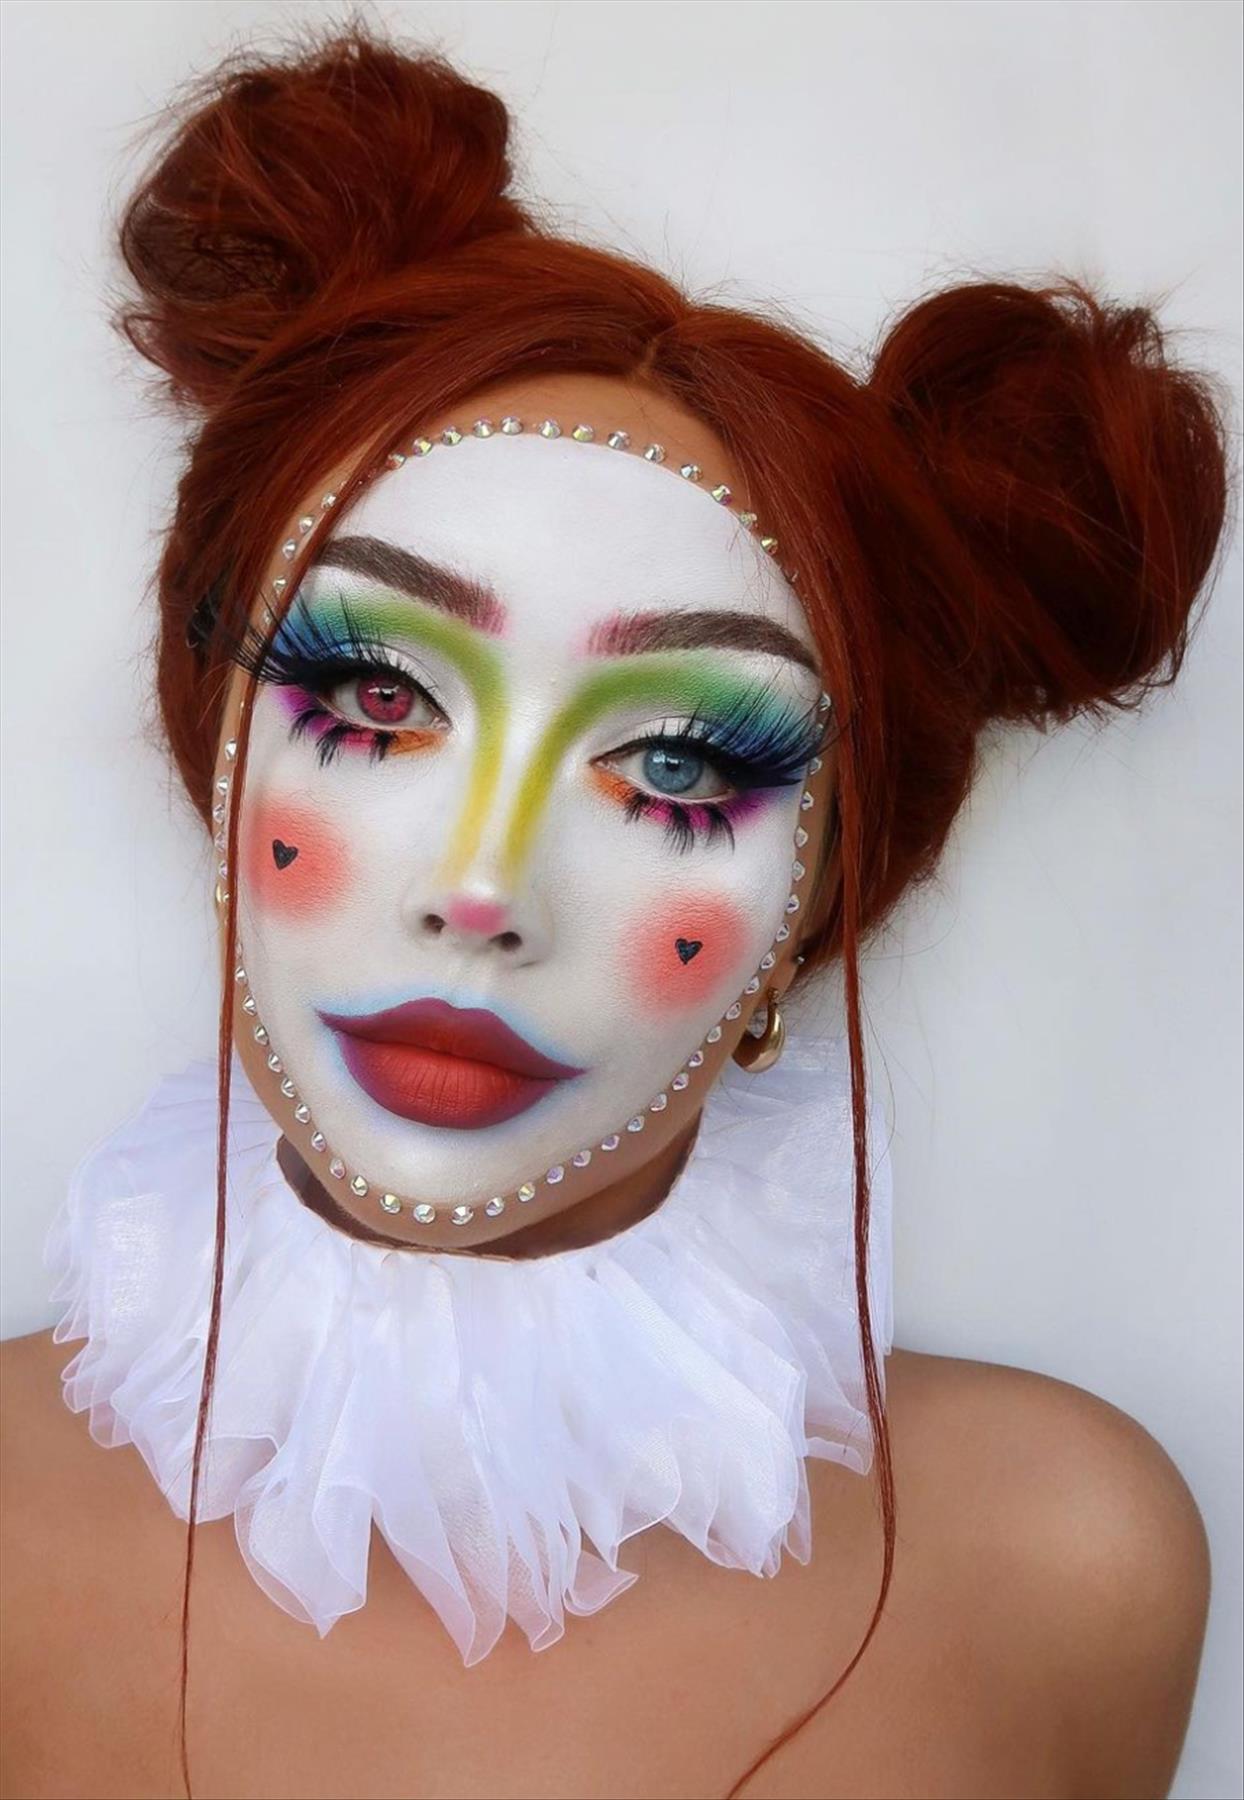 Cool Halloween makeup looks trending this year